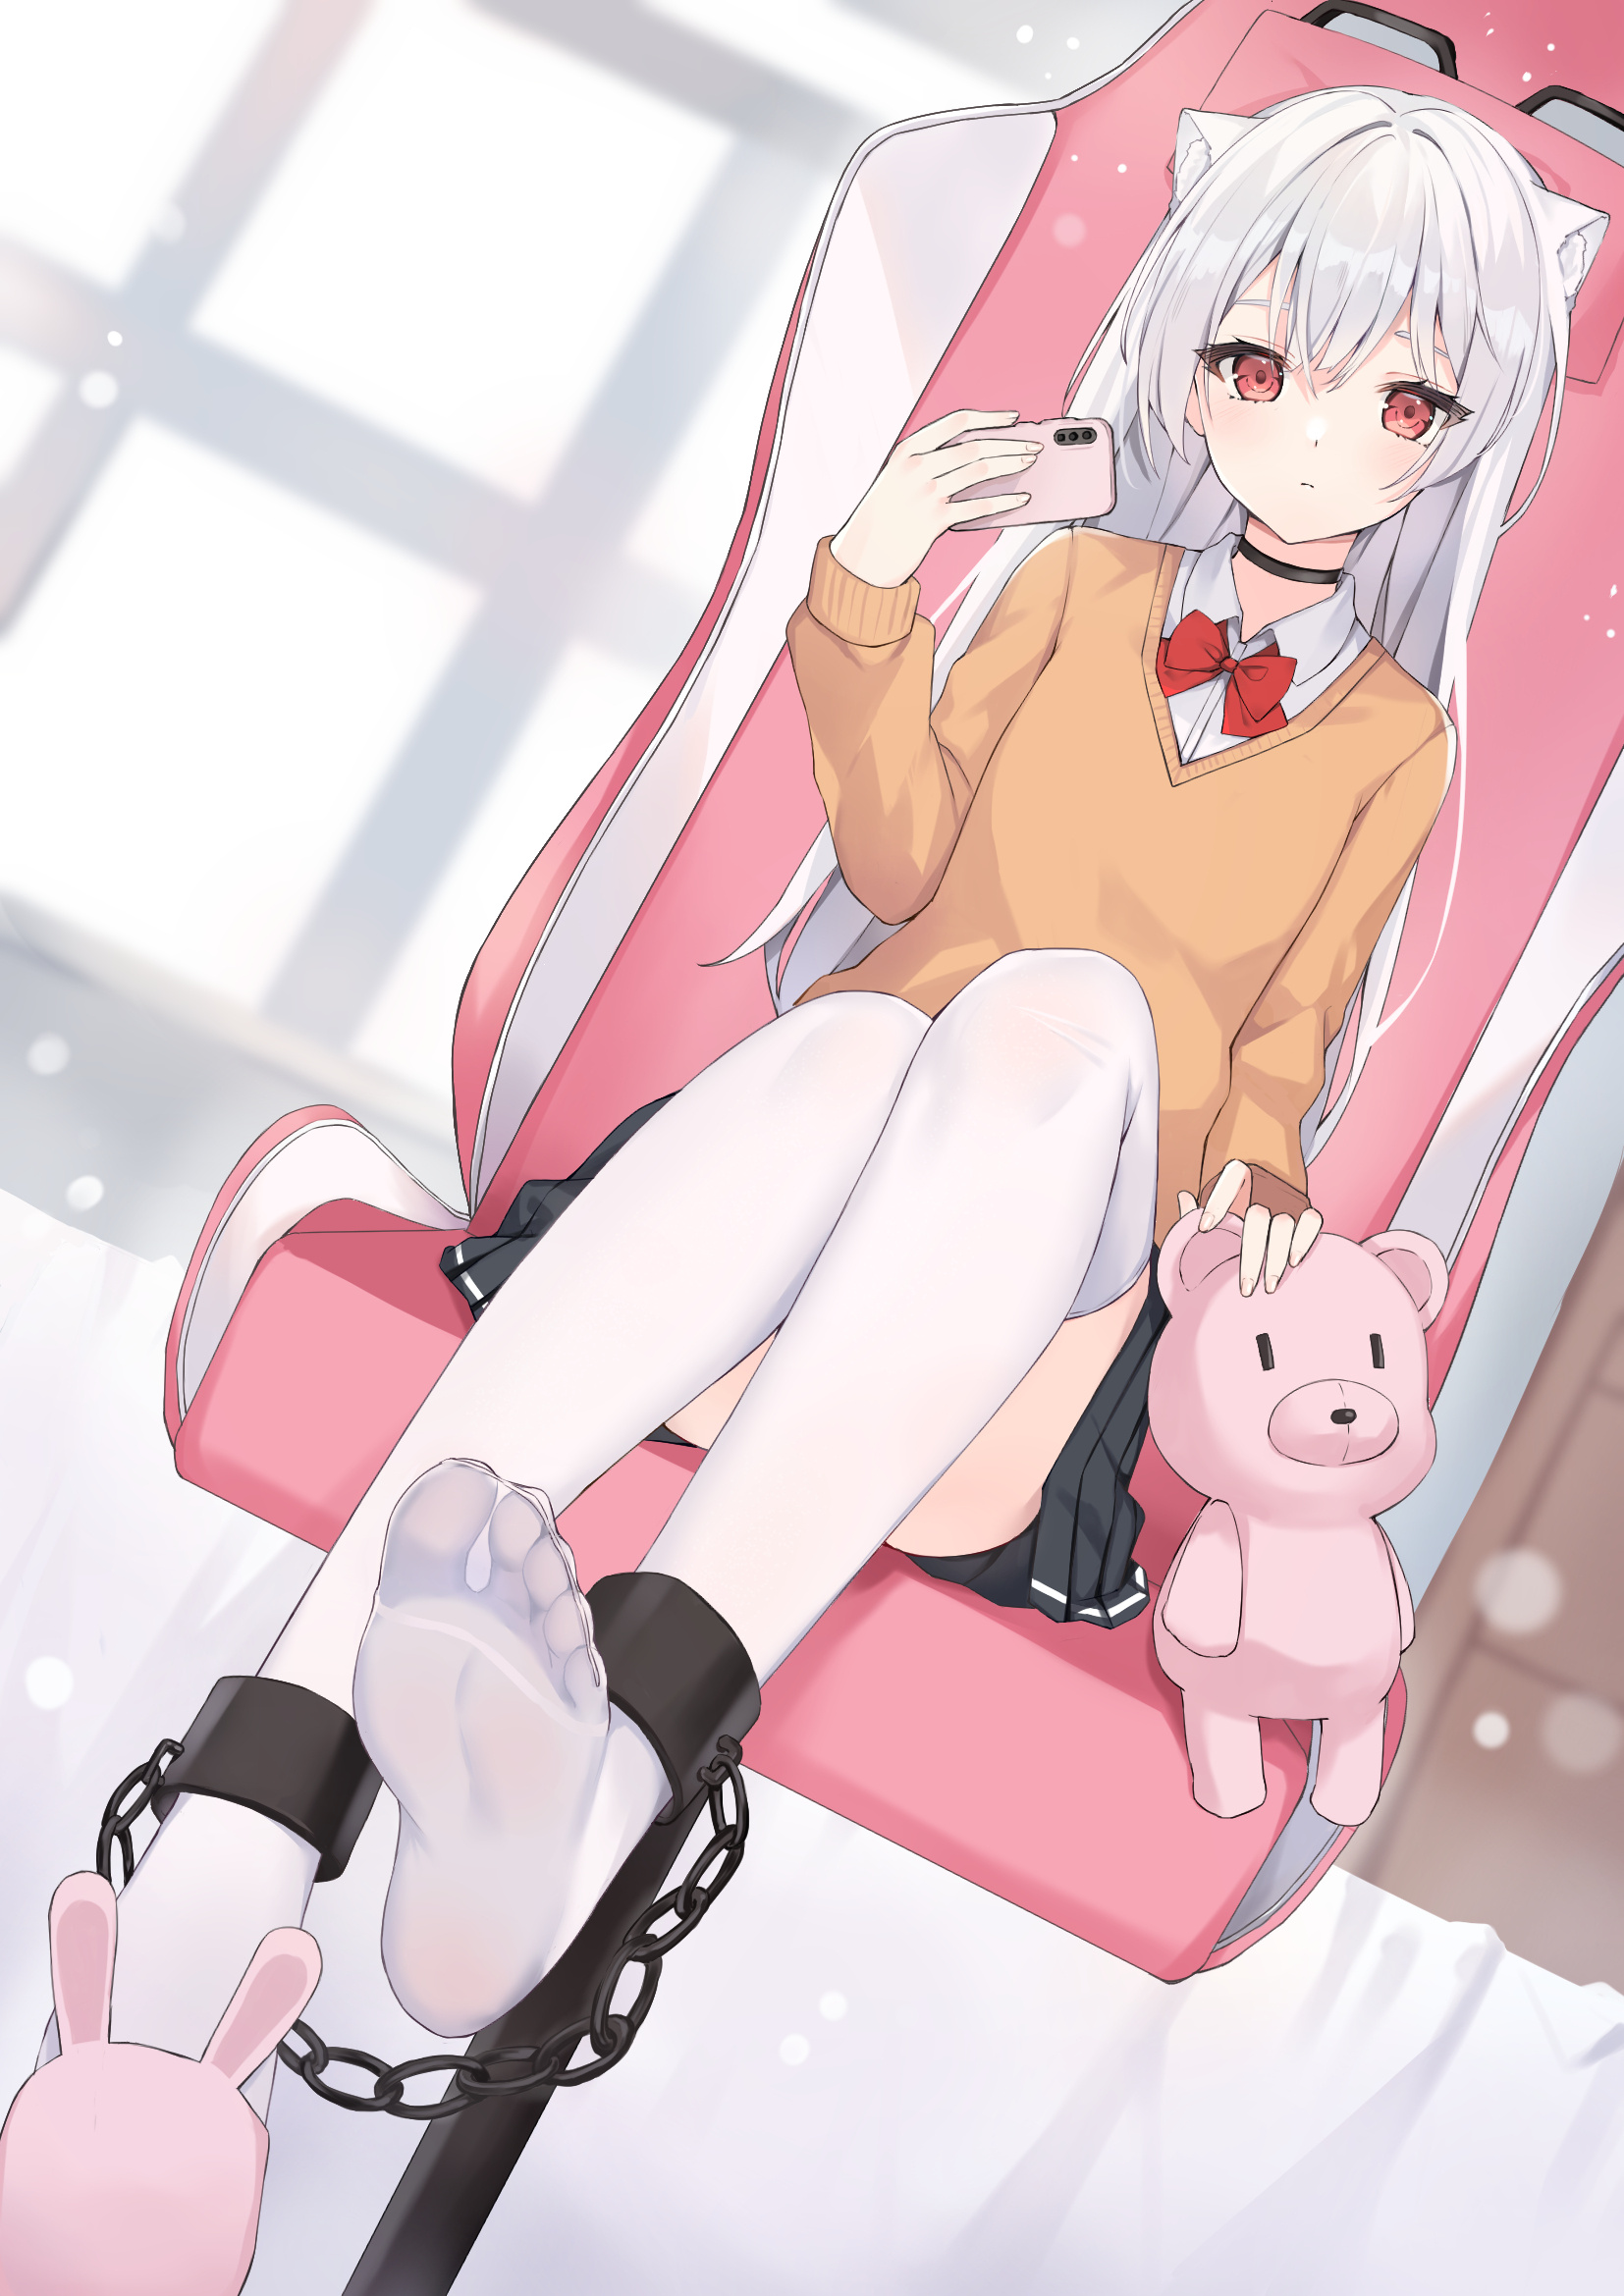 Anime Feet Skirt Anime Girls White Hair Cuffs Cat Girl Cat Ears Teddy Bears 1654x2339